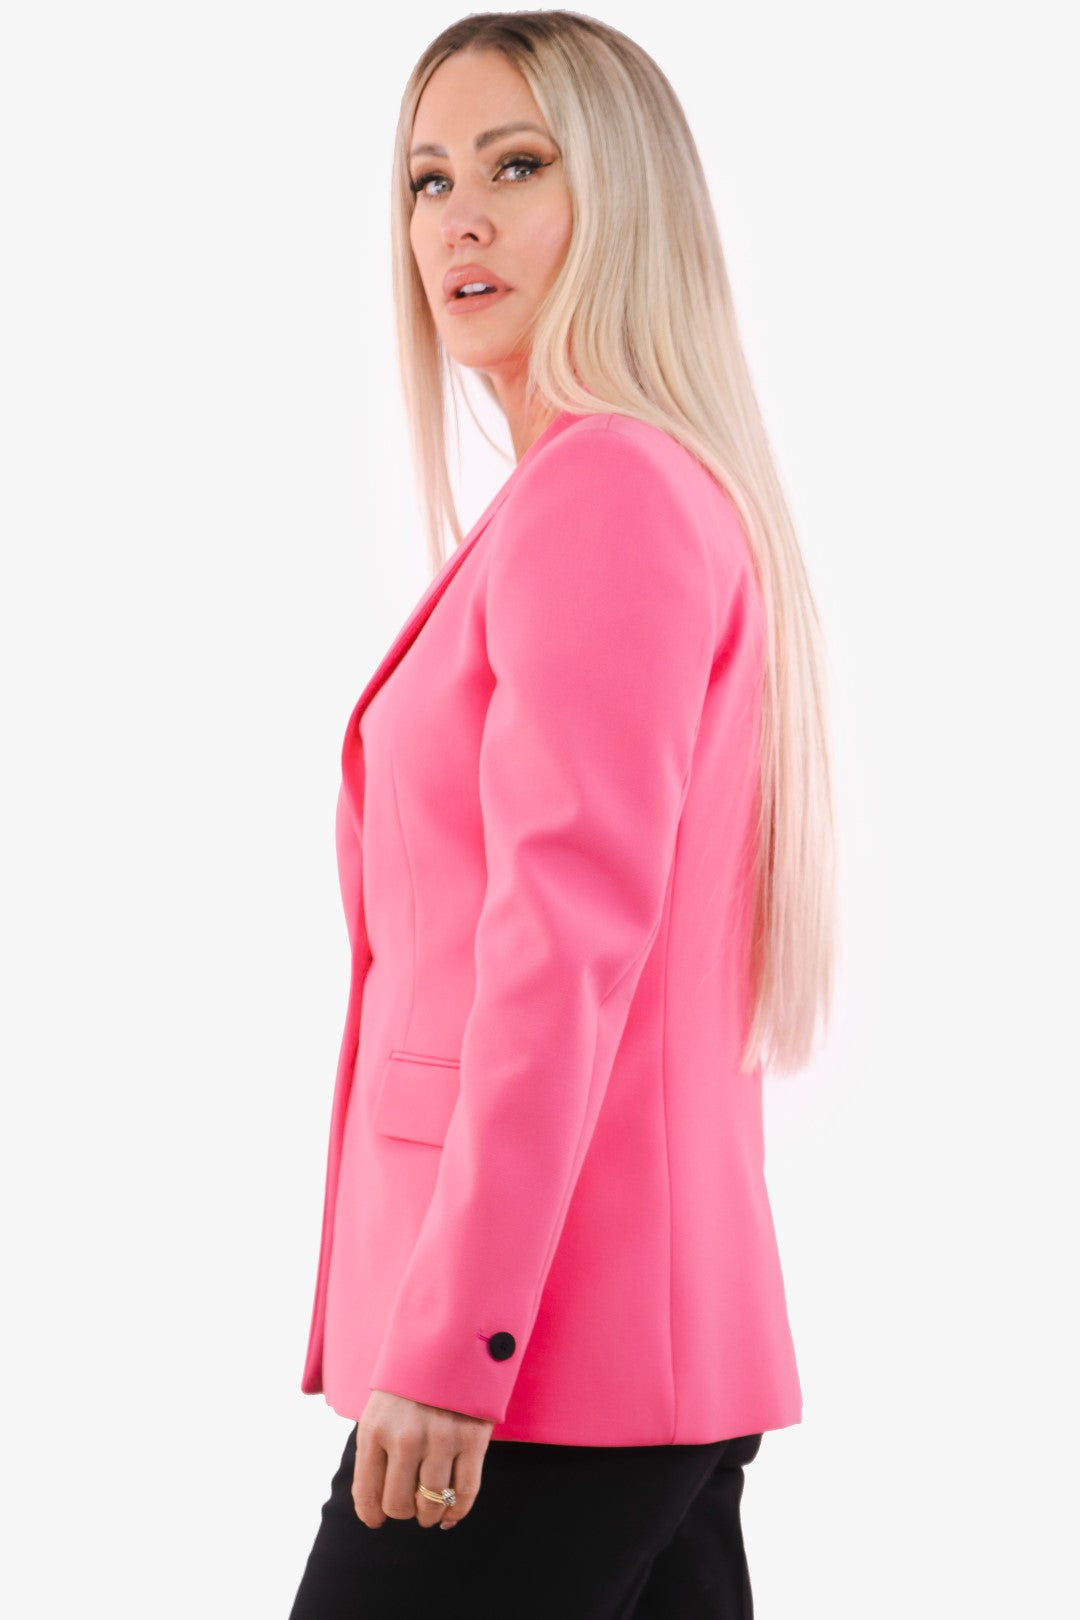 Jacket Atana Hugo Boss in Pink color